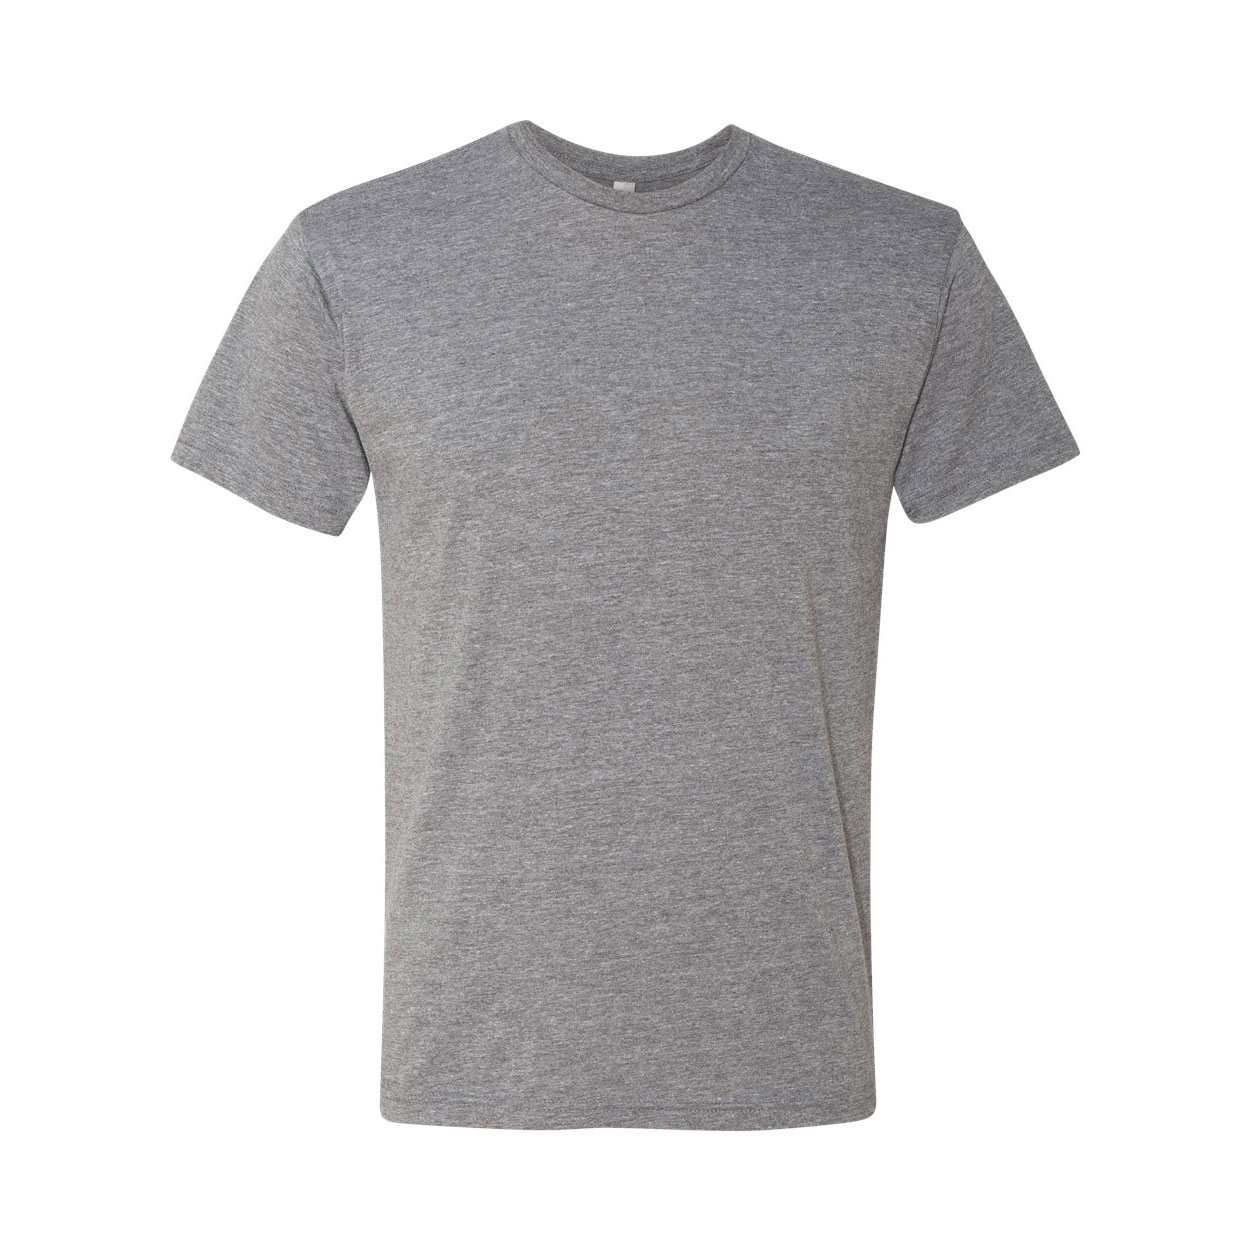 Product Details: Premium Shirt – Extra Soft Tri-Blend Premium Heather (Sport Gray) “Night Out” Style (Next Level Apparel 6010 Men's Tri-Blend Crew T-Shirt)